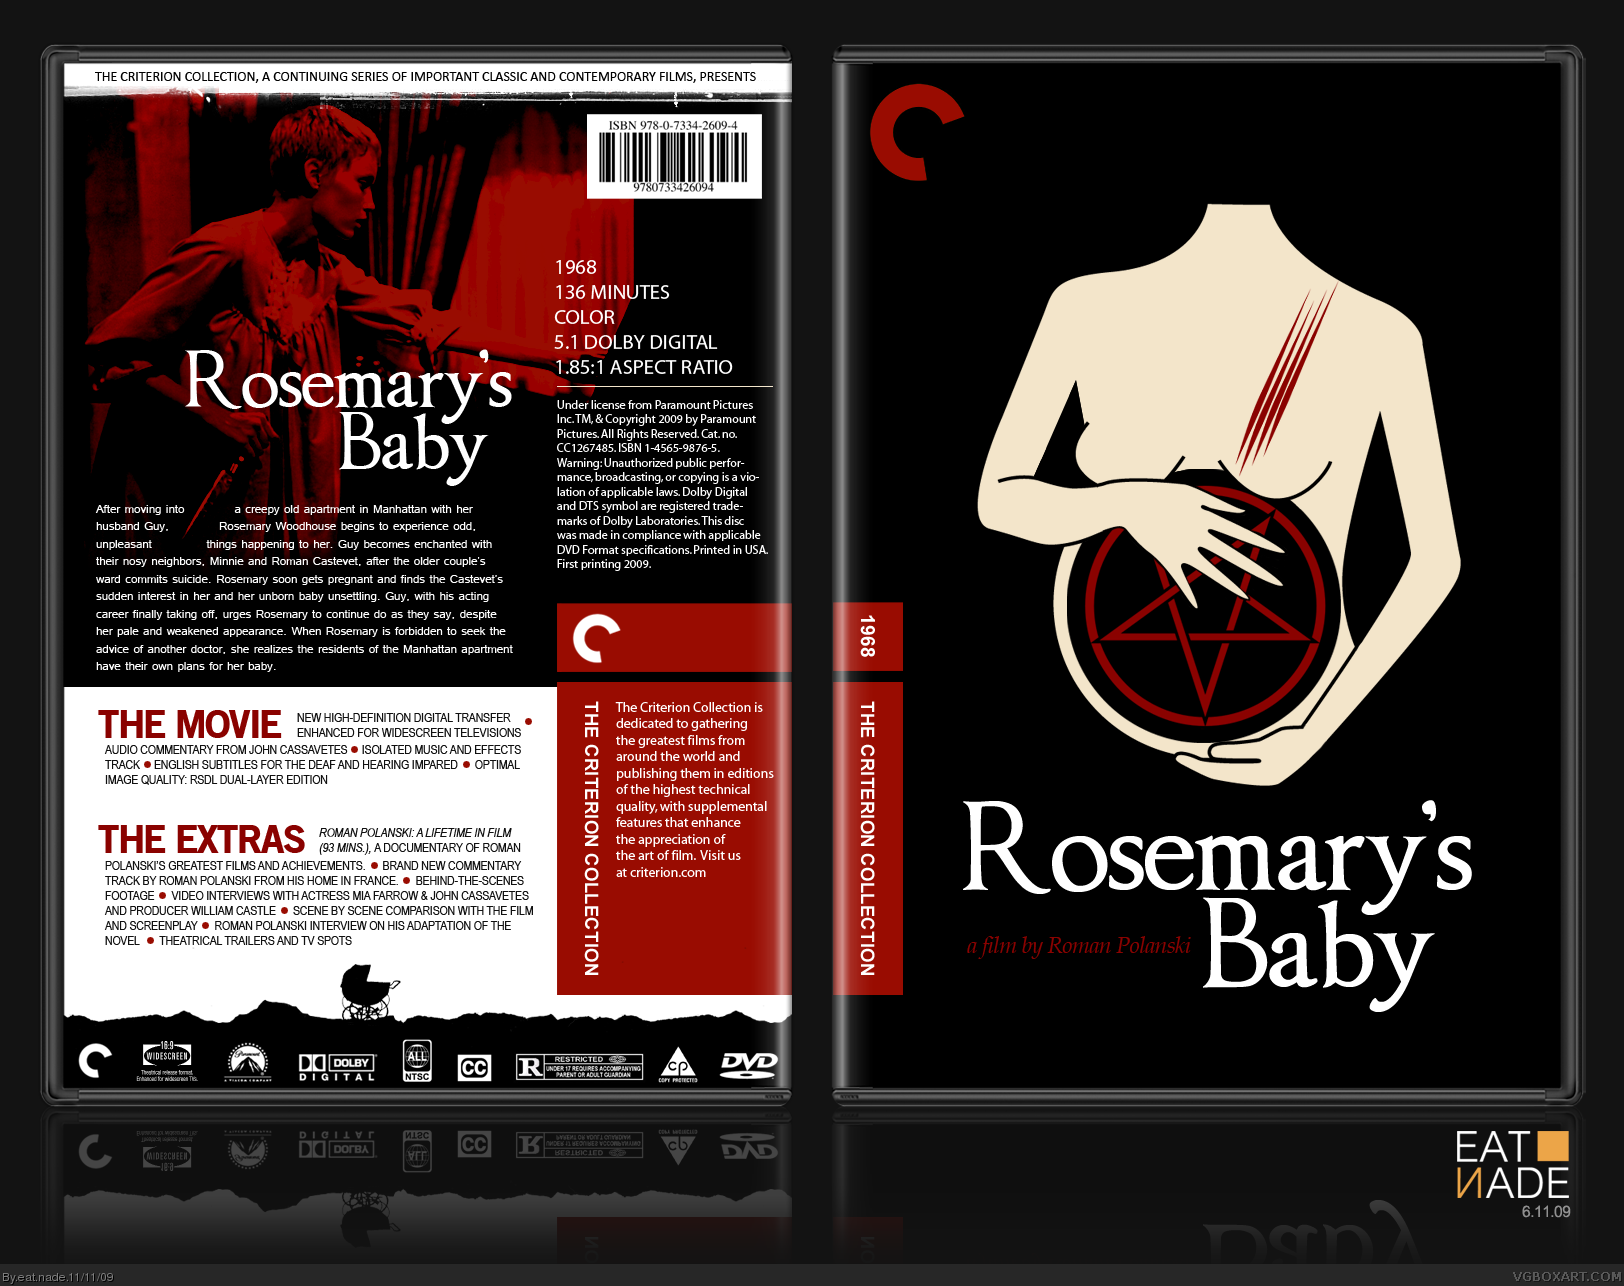 Rosemary's Baby box cover